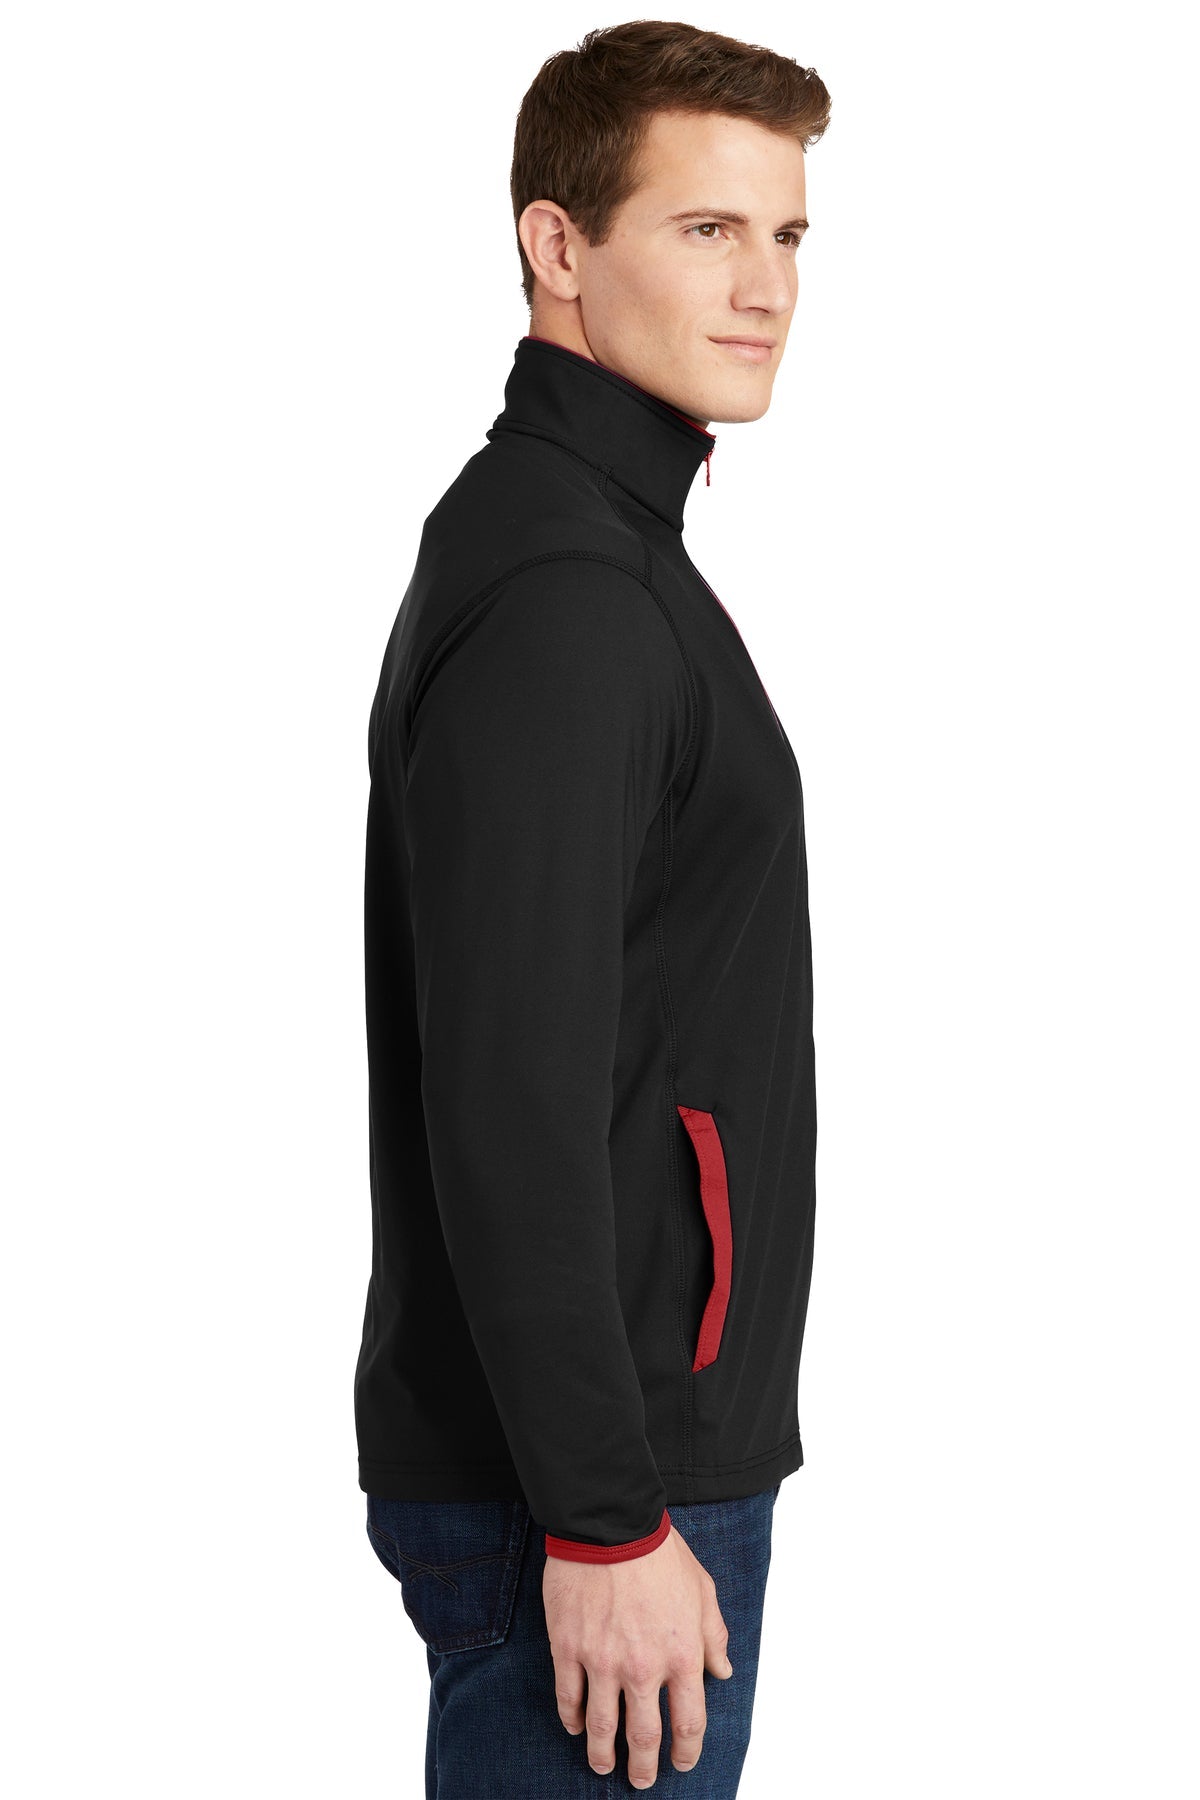 sport-tek_st853 _black/ true red_company_logo_sweatshirts